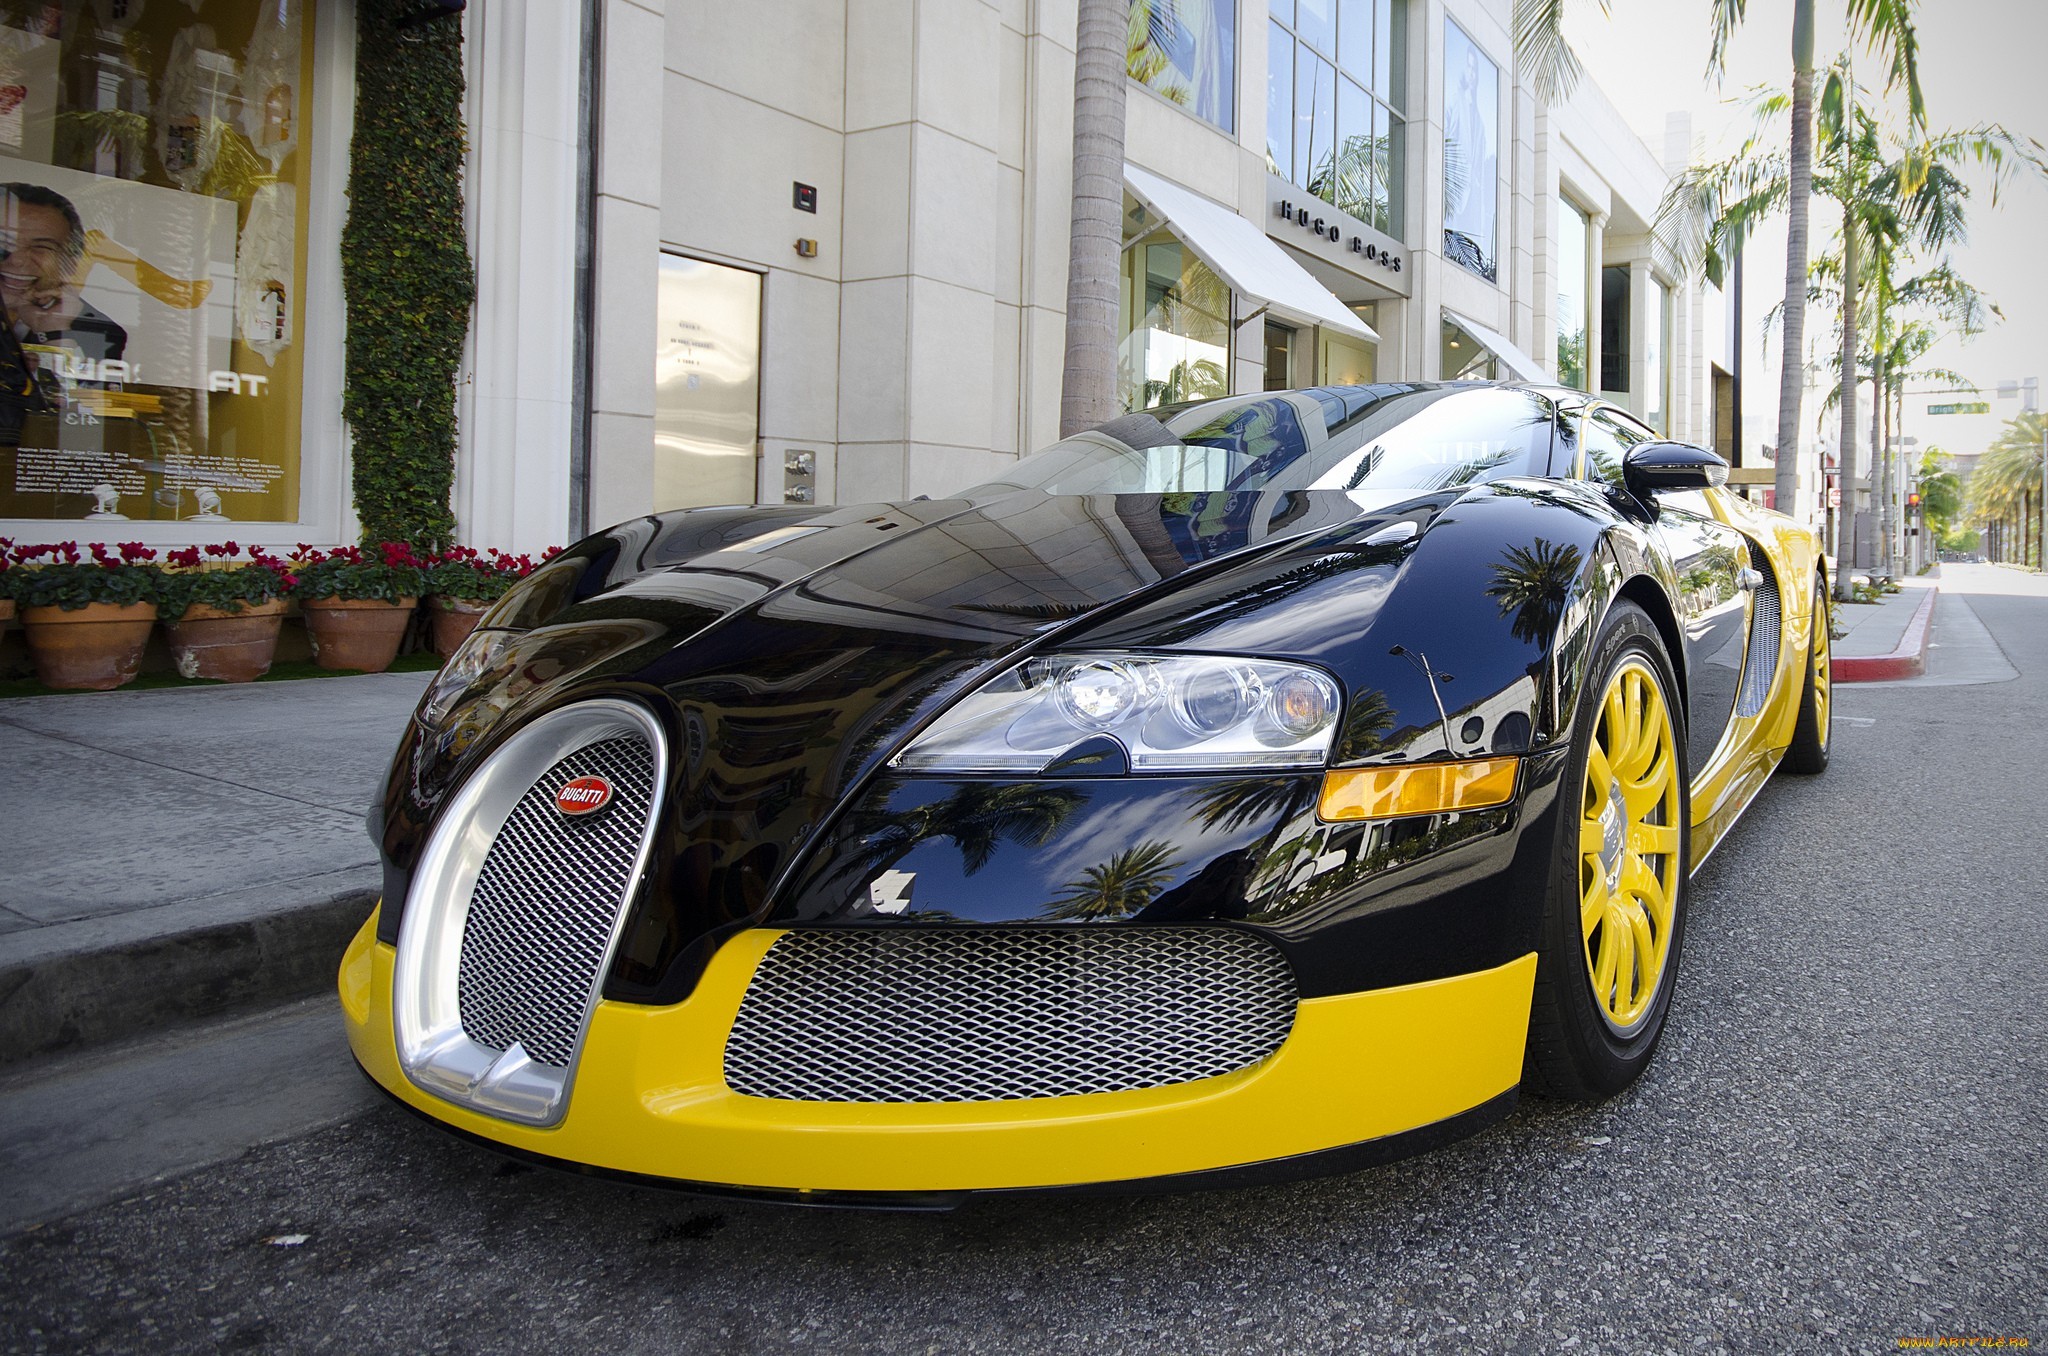 General 2048x1356 car luxury cars Bugatti Bugatti Veyron vehicle black cars yellow city urban French Cars Volkswagen Group Hypercar